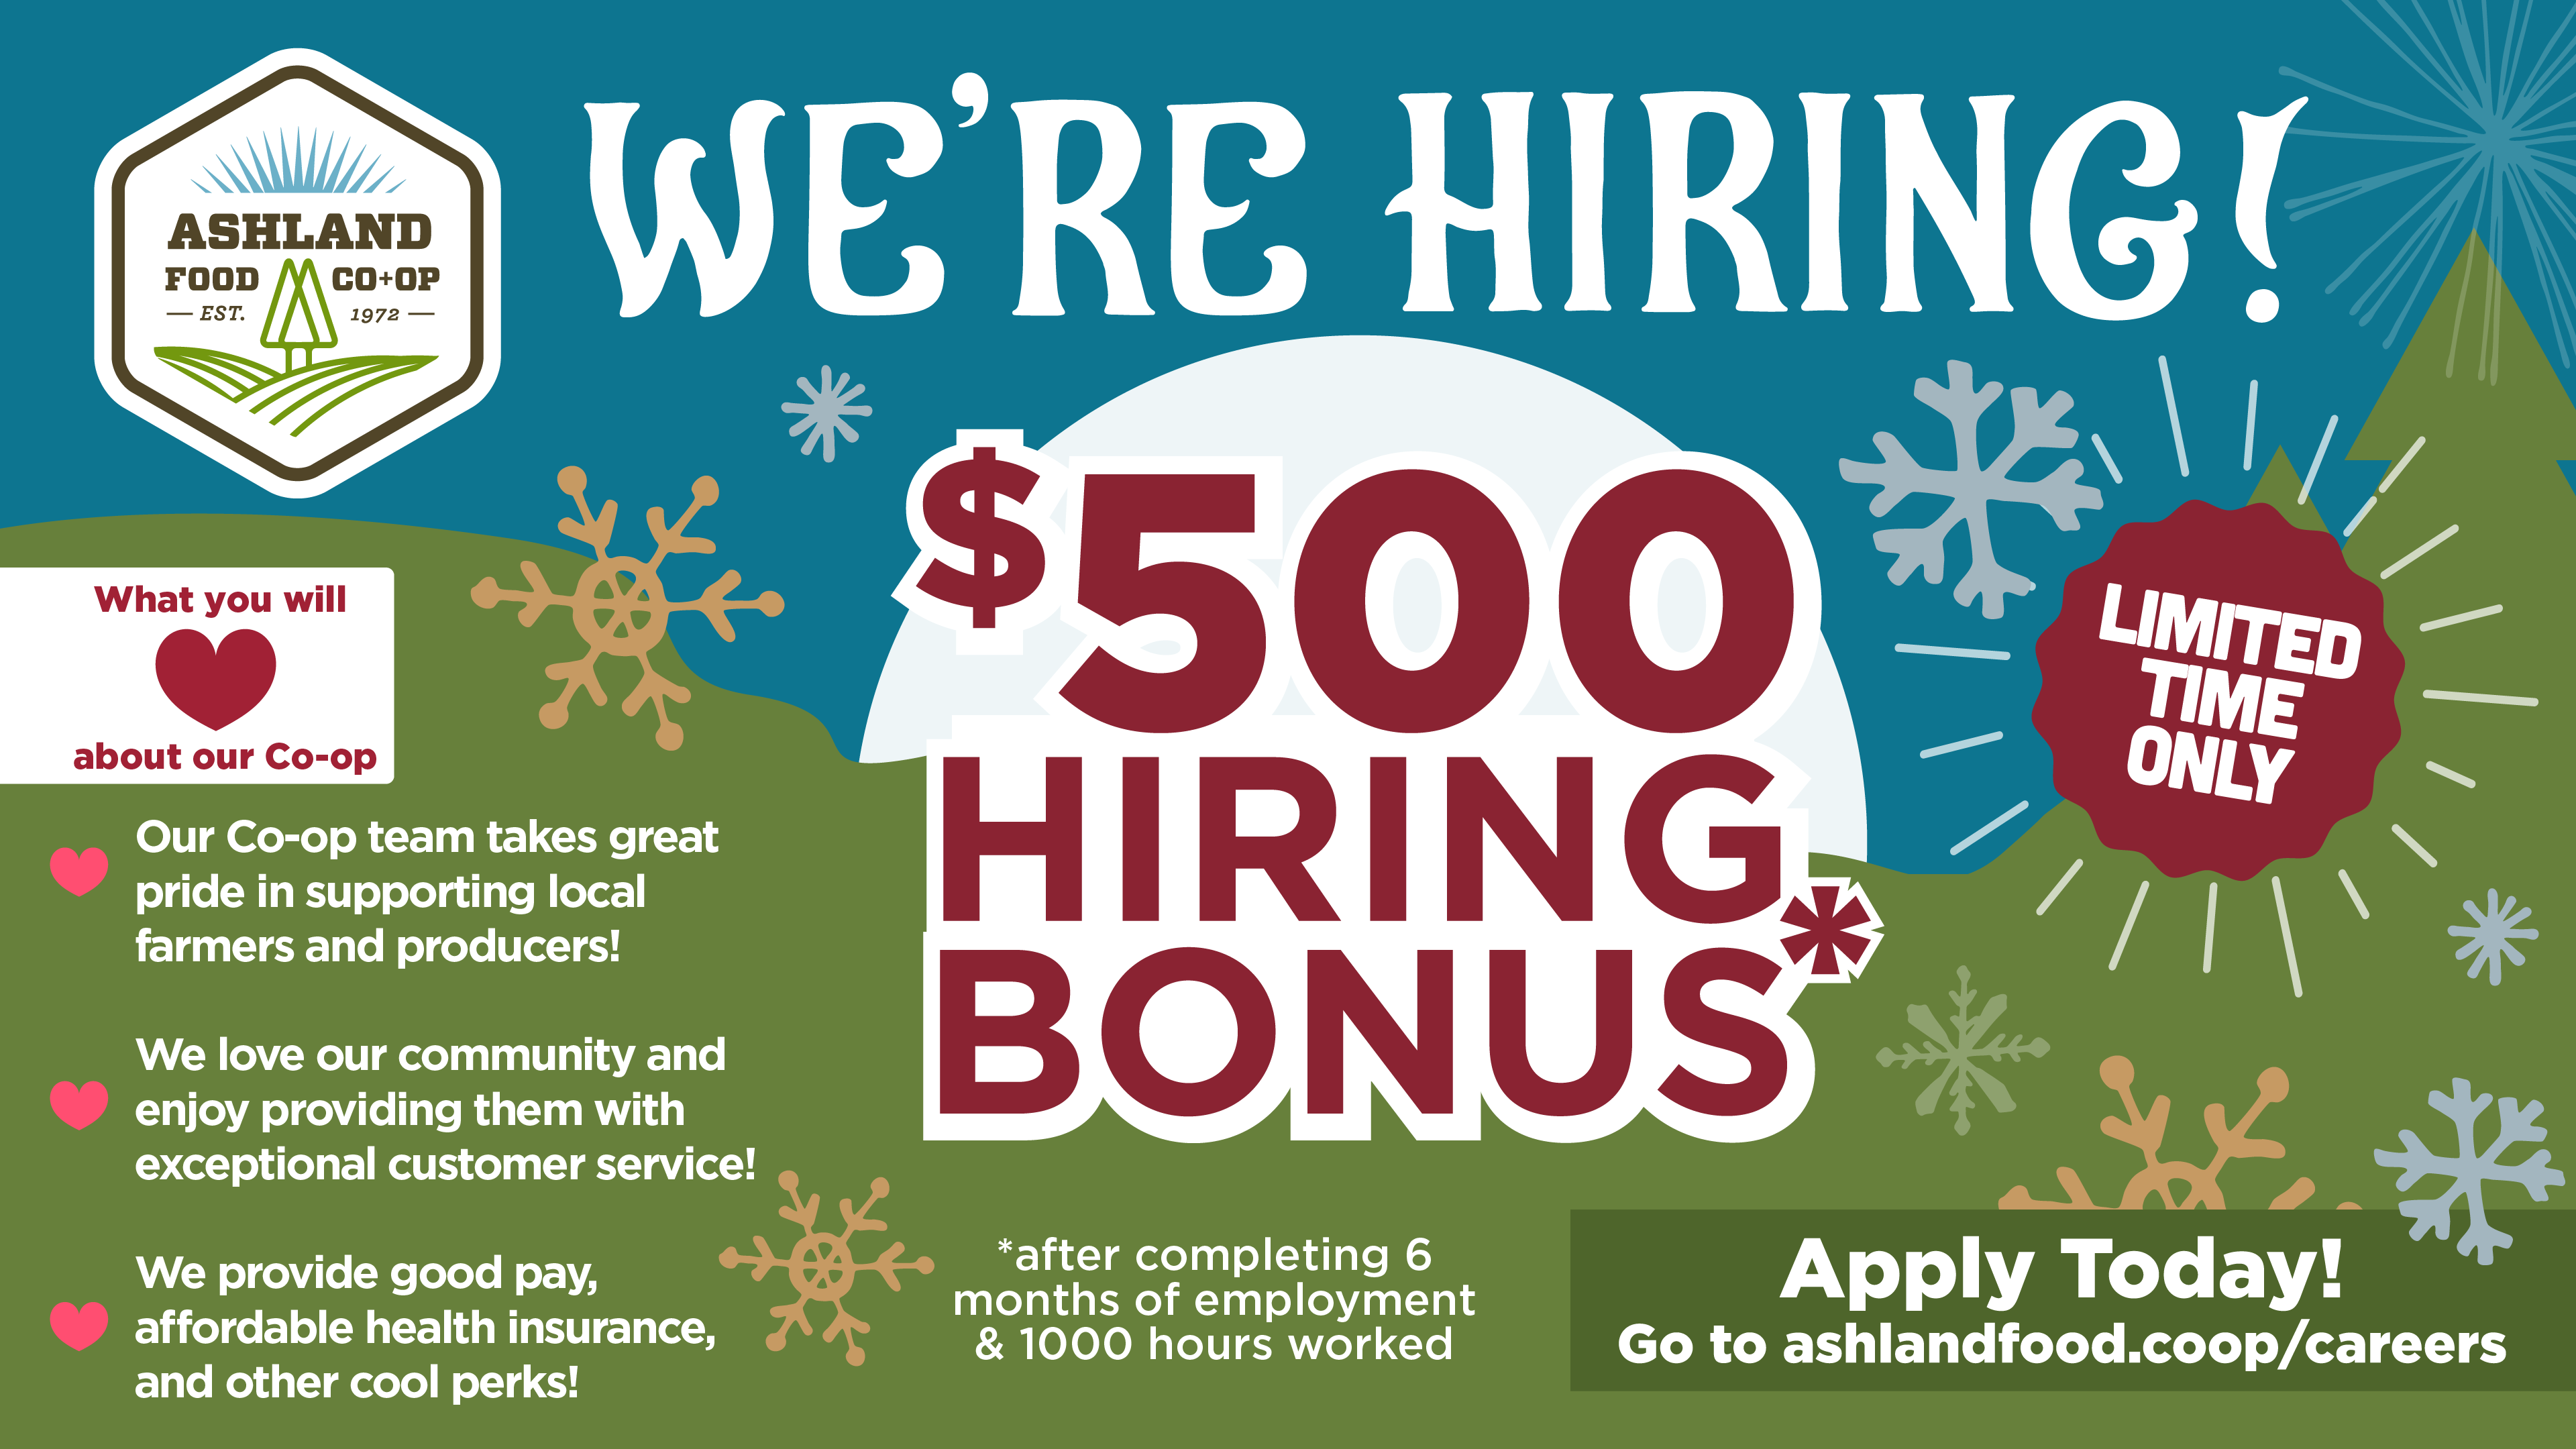 We're Hiring! Ask about the $500 Hiring Bonus!